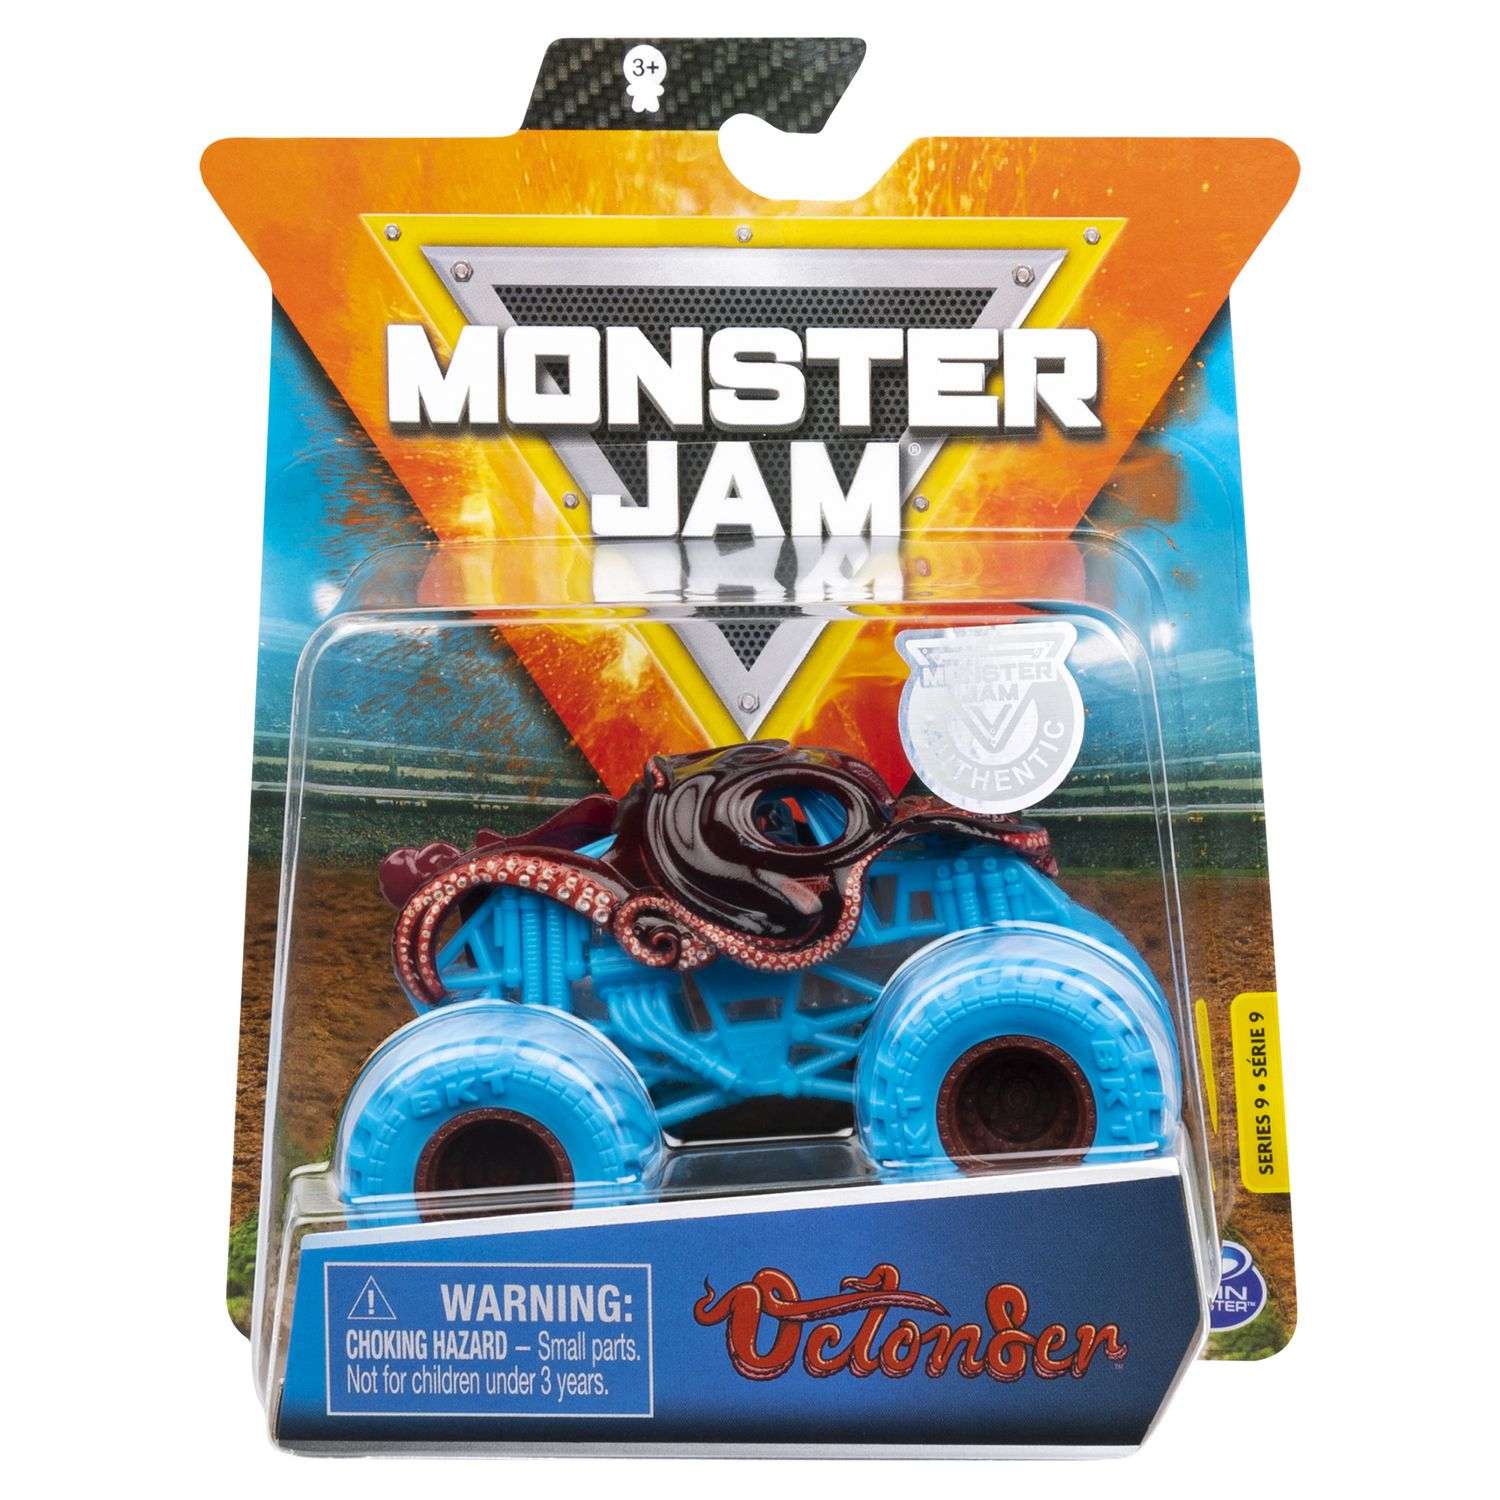 Машинка Monster Jam 1:64 Octon8er 6044941/20120661 6044941 - фото 2